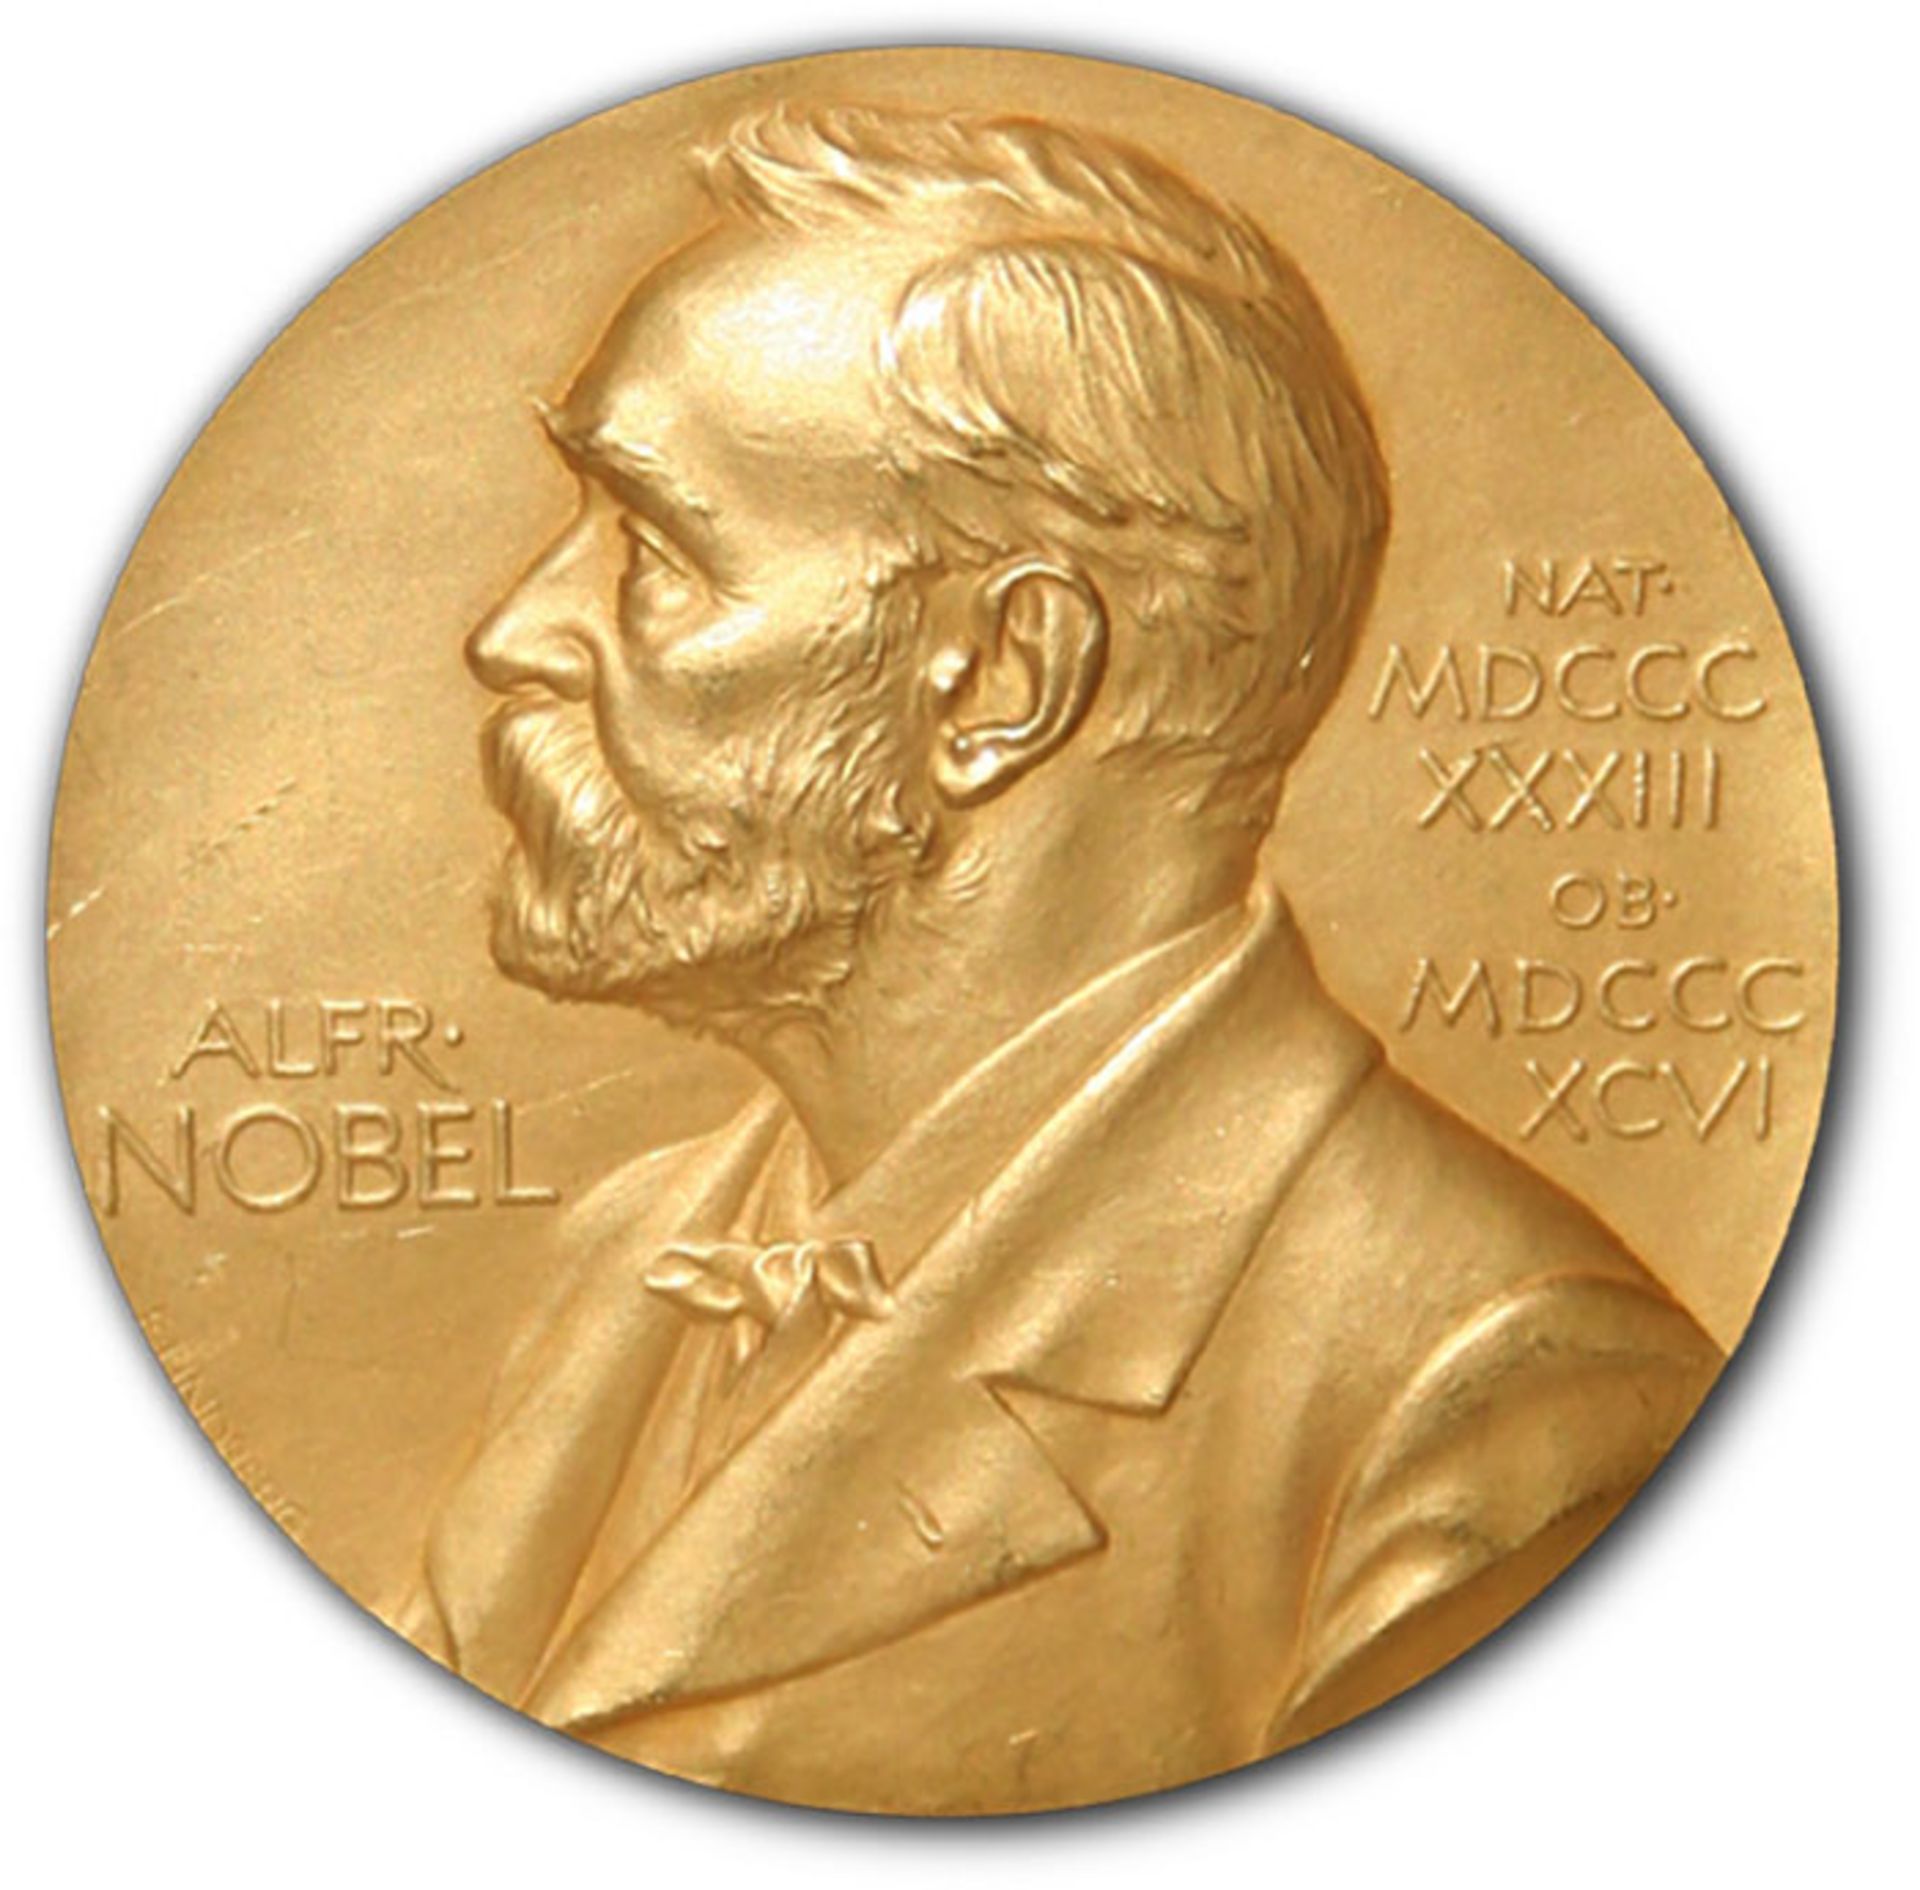 نوبل فیزیک